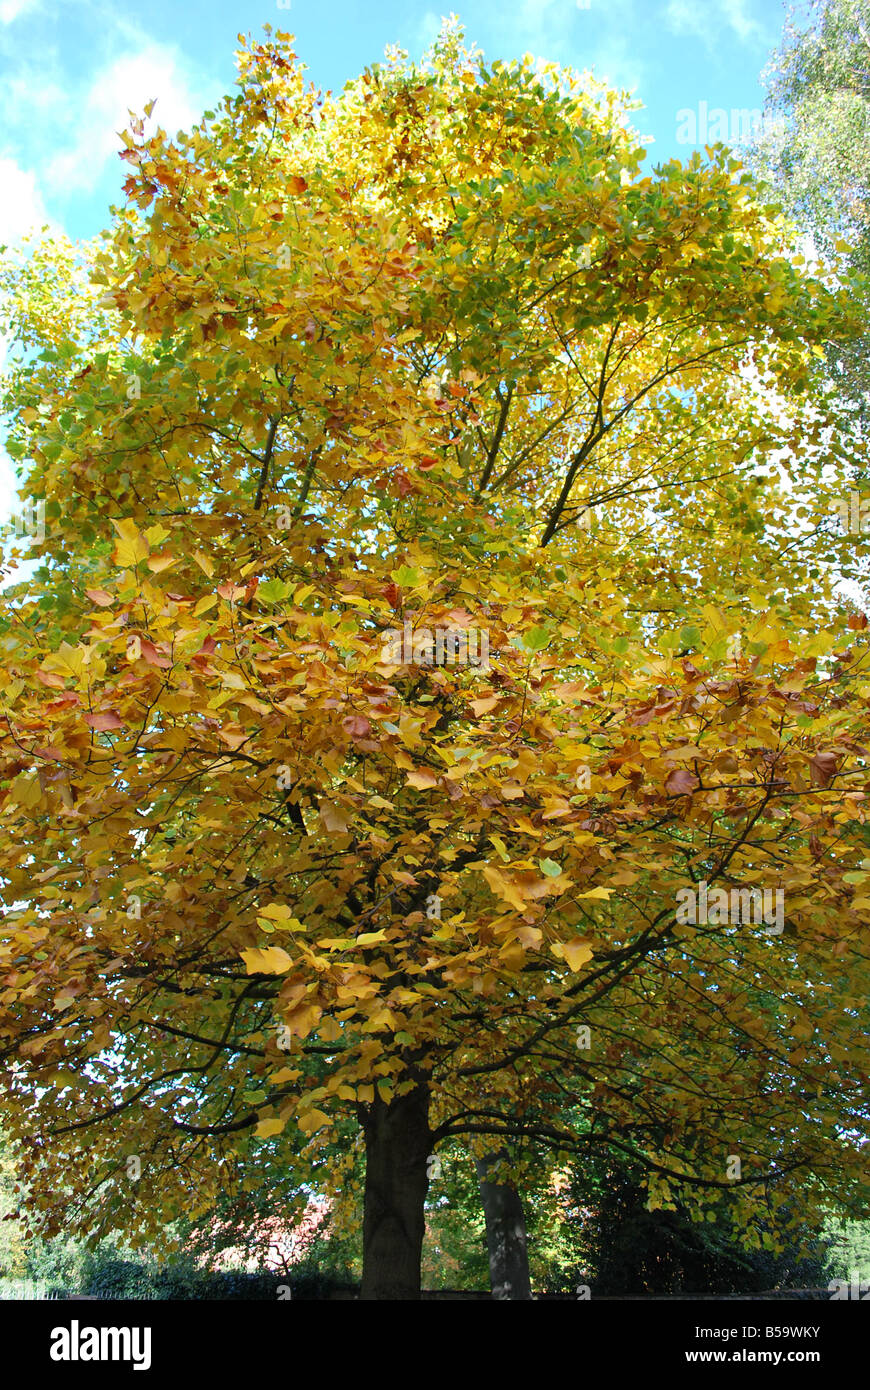 Autumn leaves on tree Stock Photo